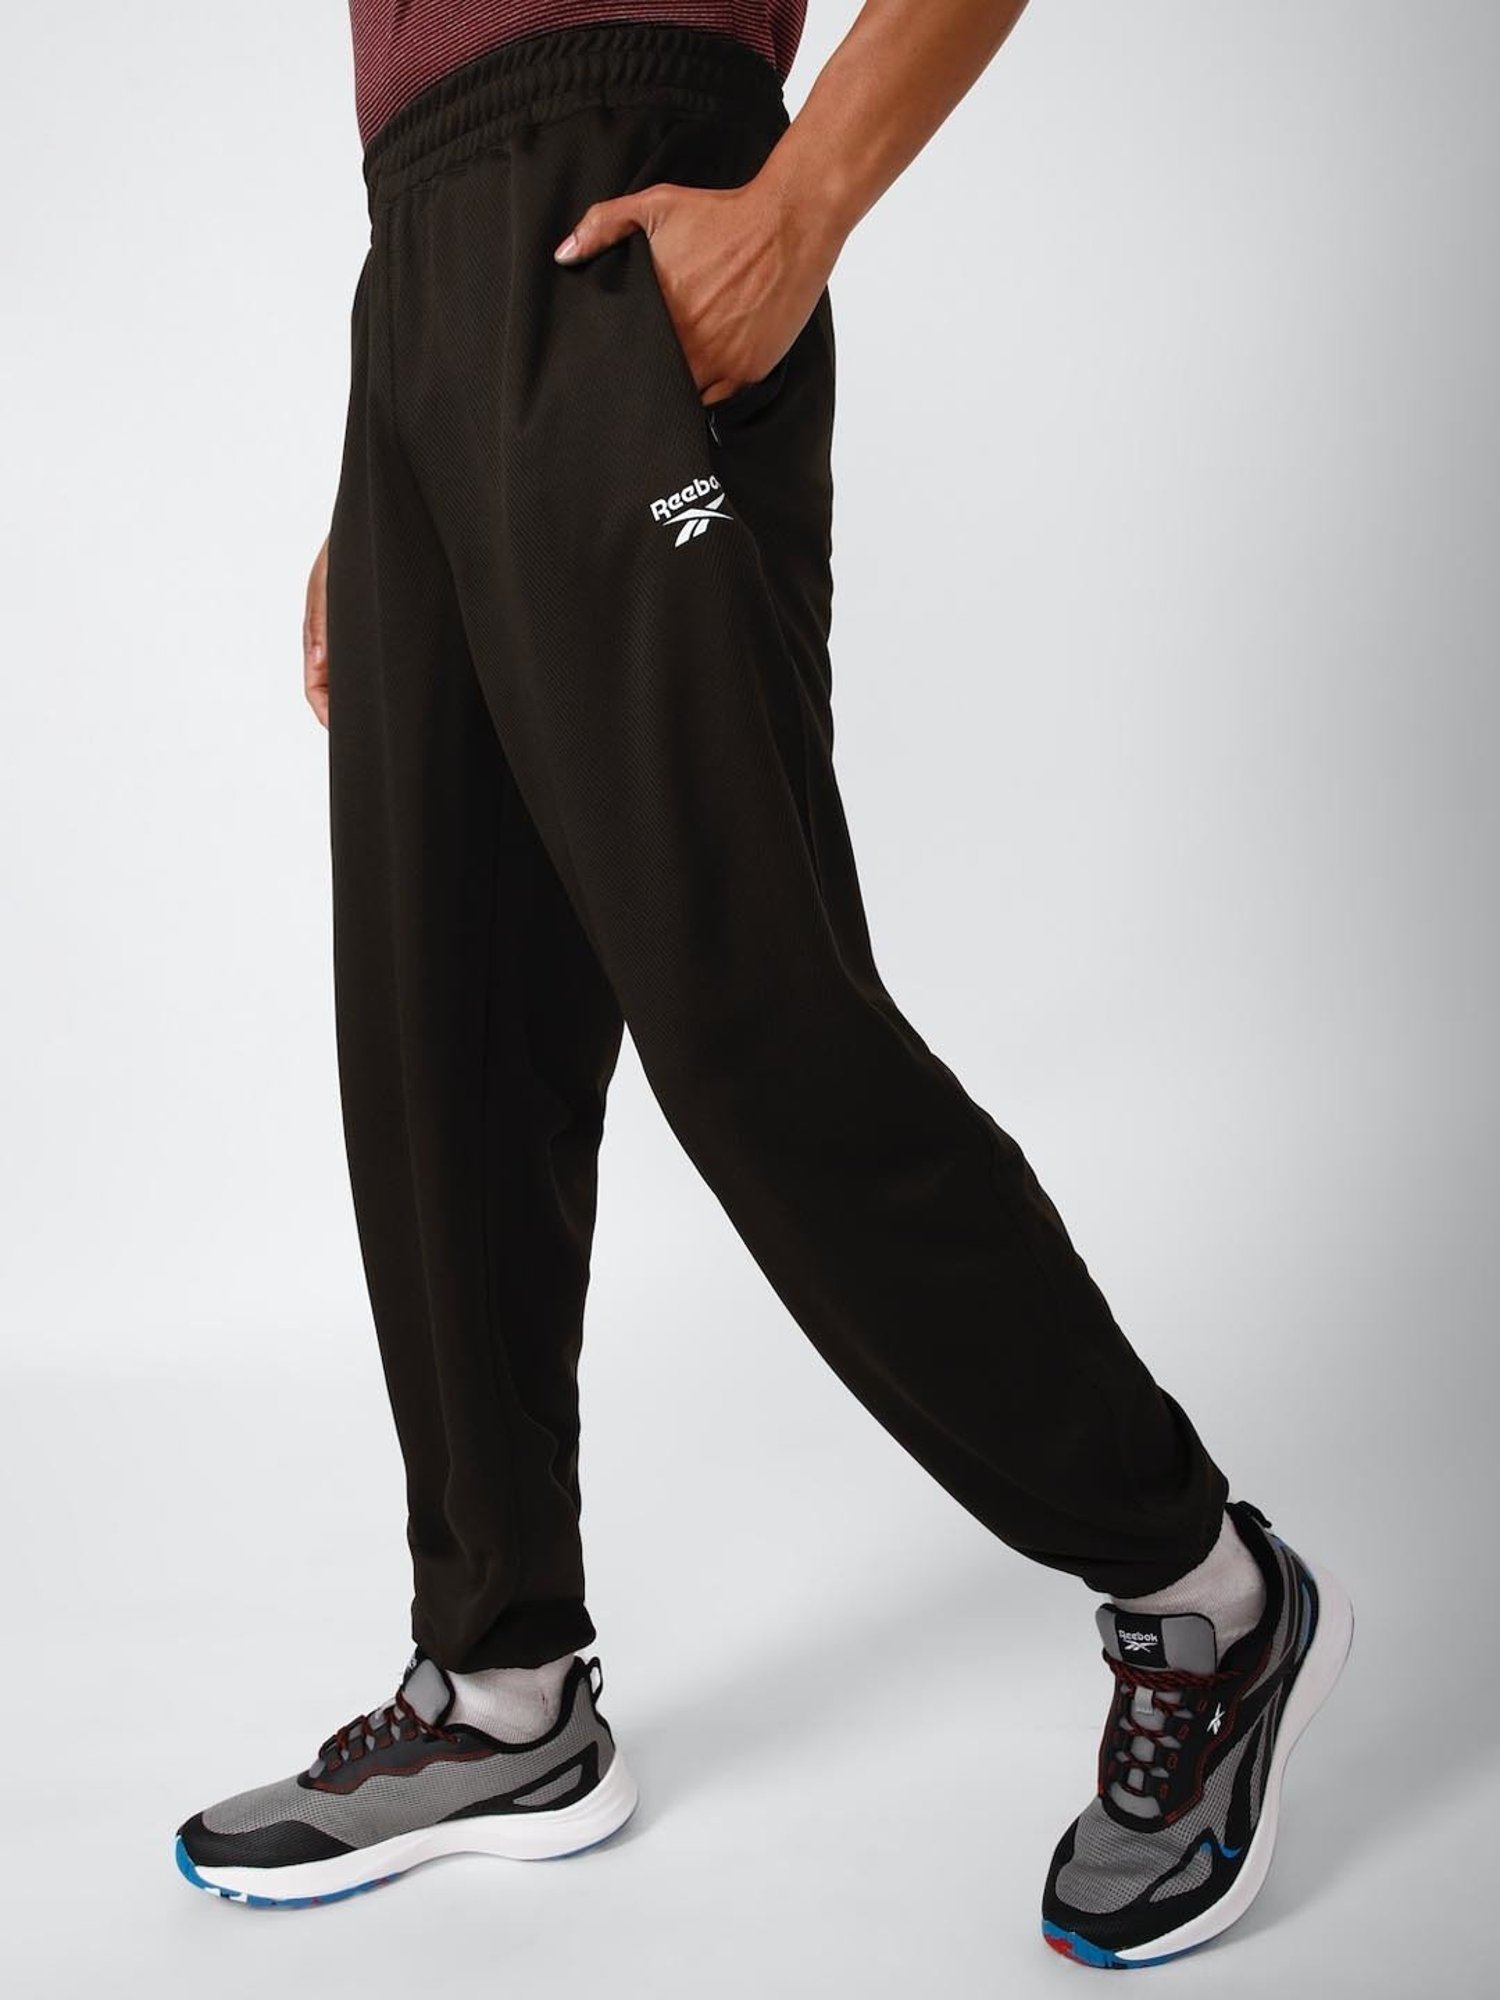 Reebok to myt warming pant ladies pants sports trousers training, black,  xxl | eBay